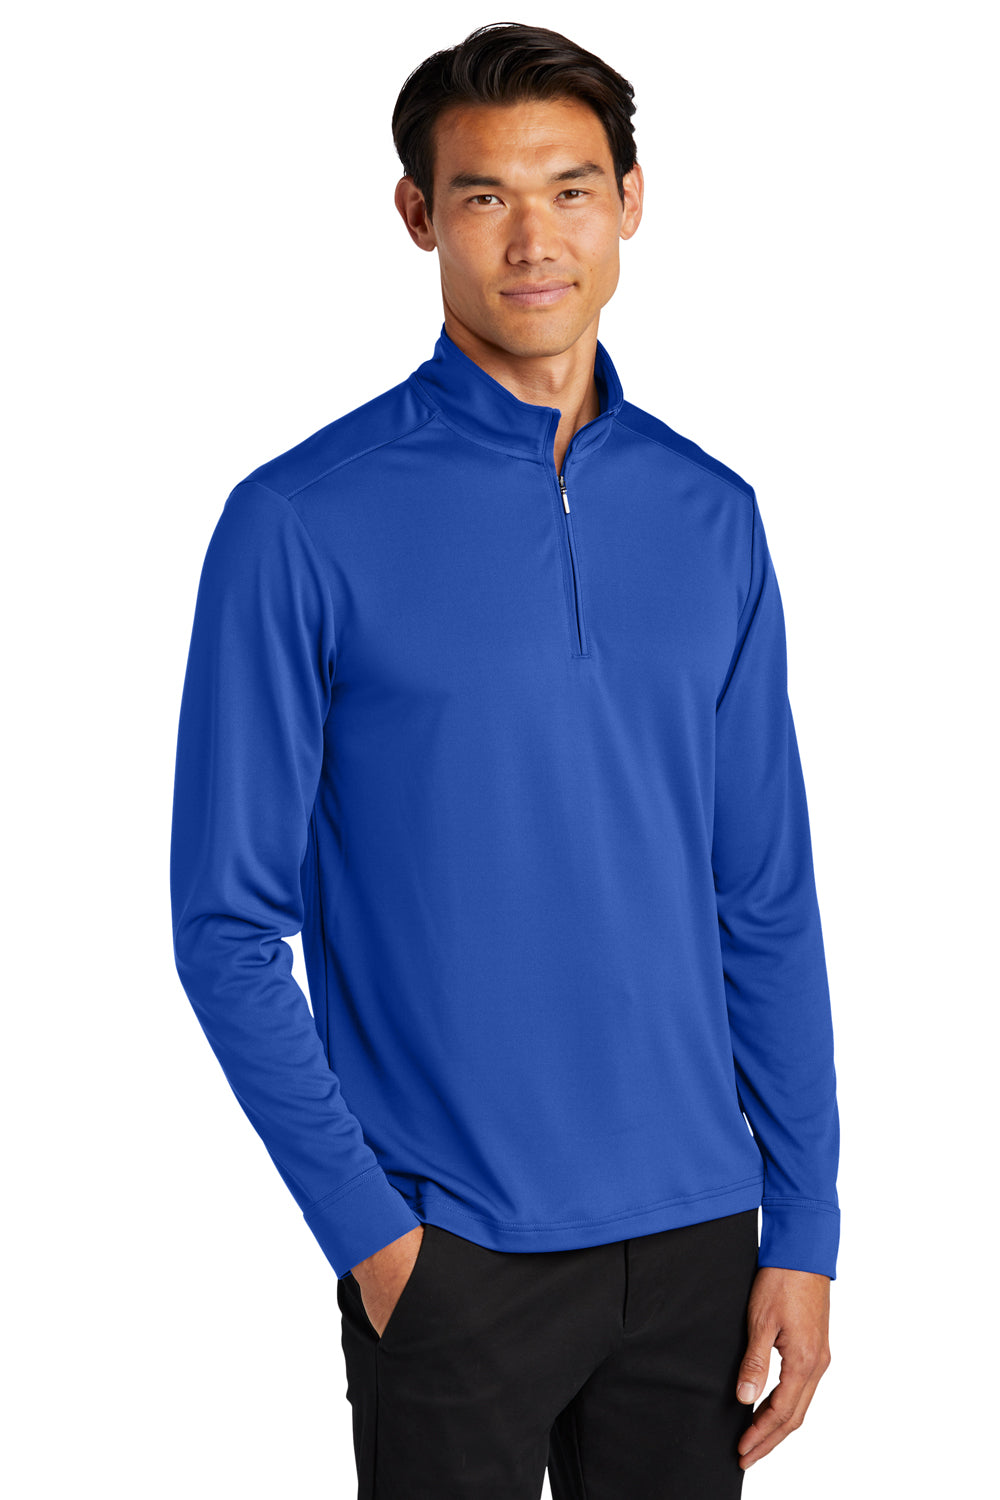 Port Authority K865 C-Free 1/4 Zip Sweatshirt True Royal Blue 3Q